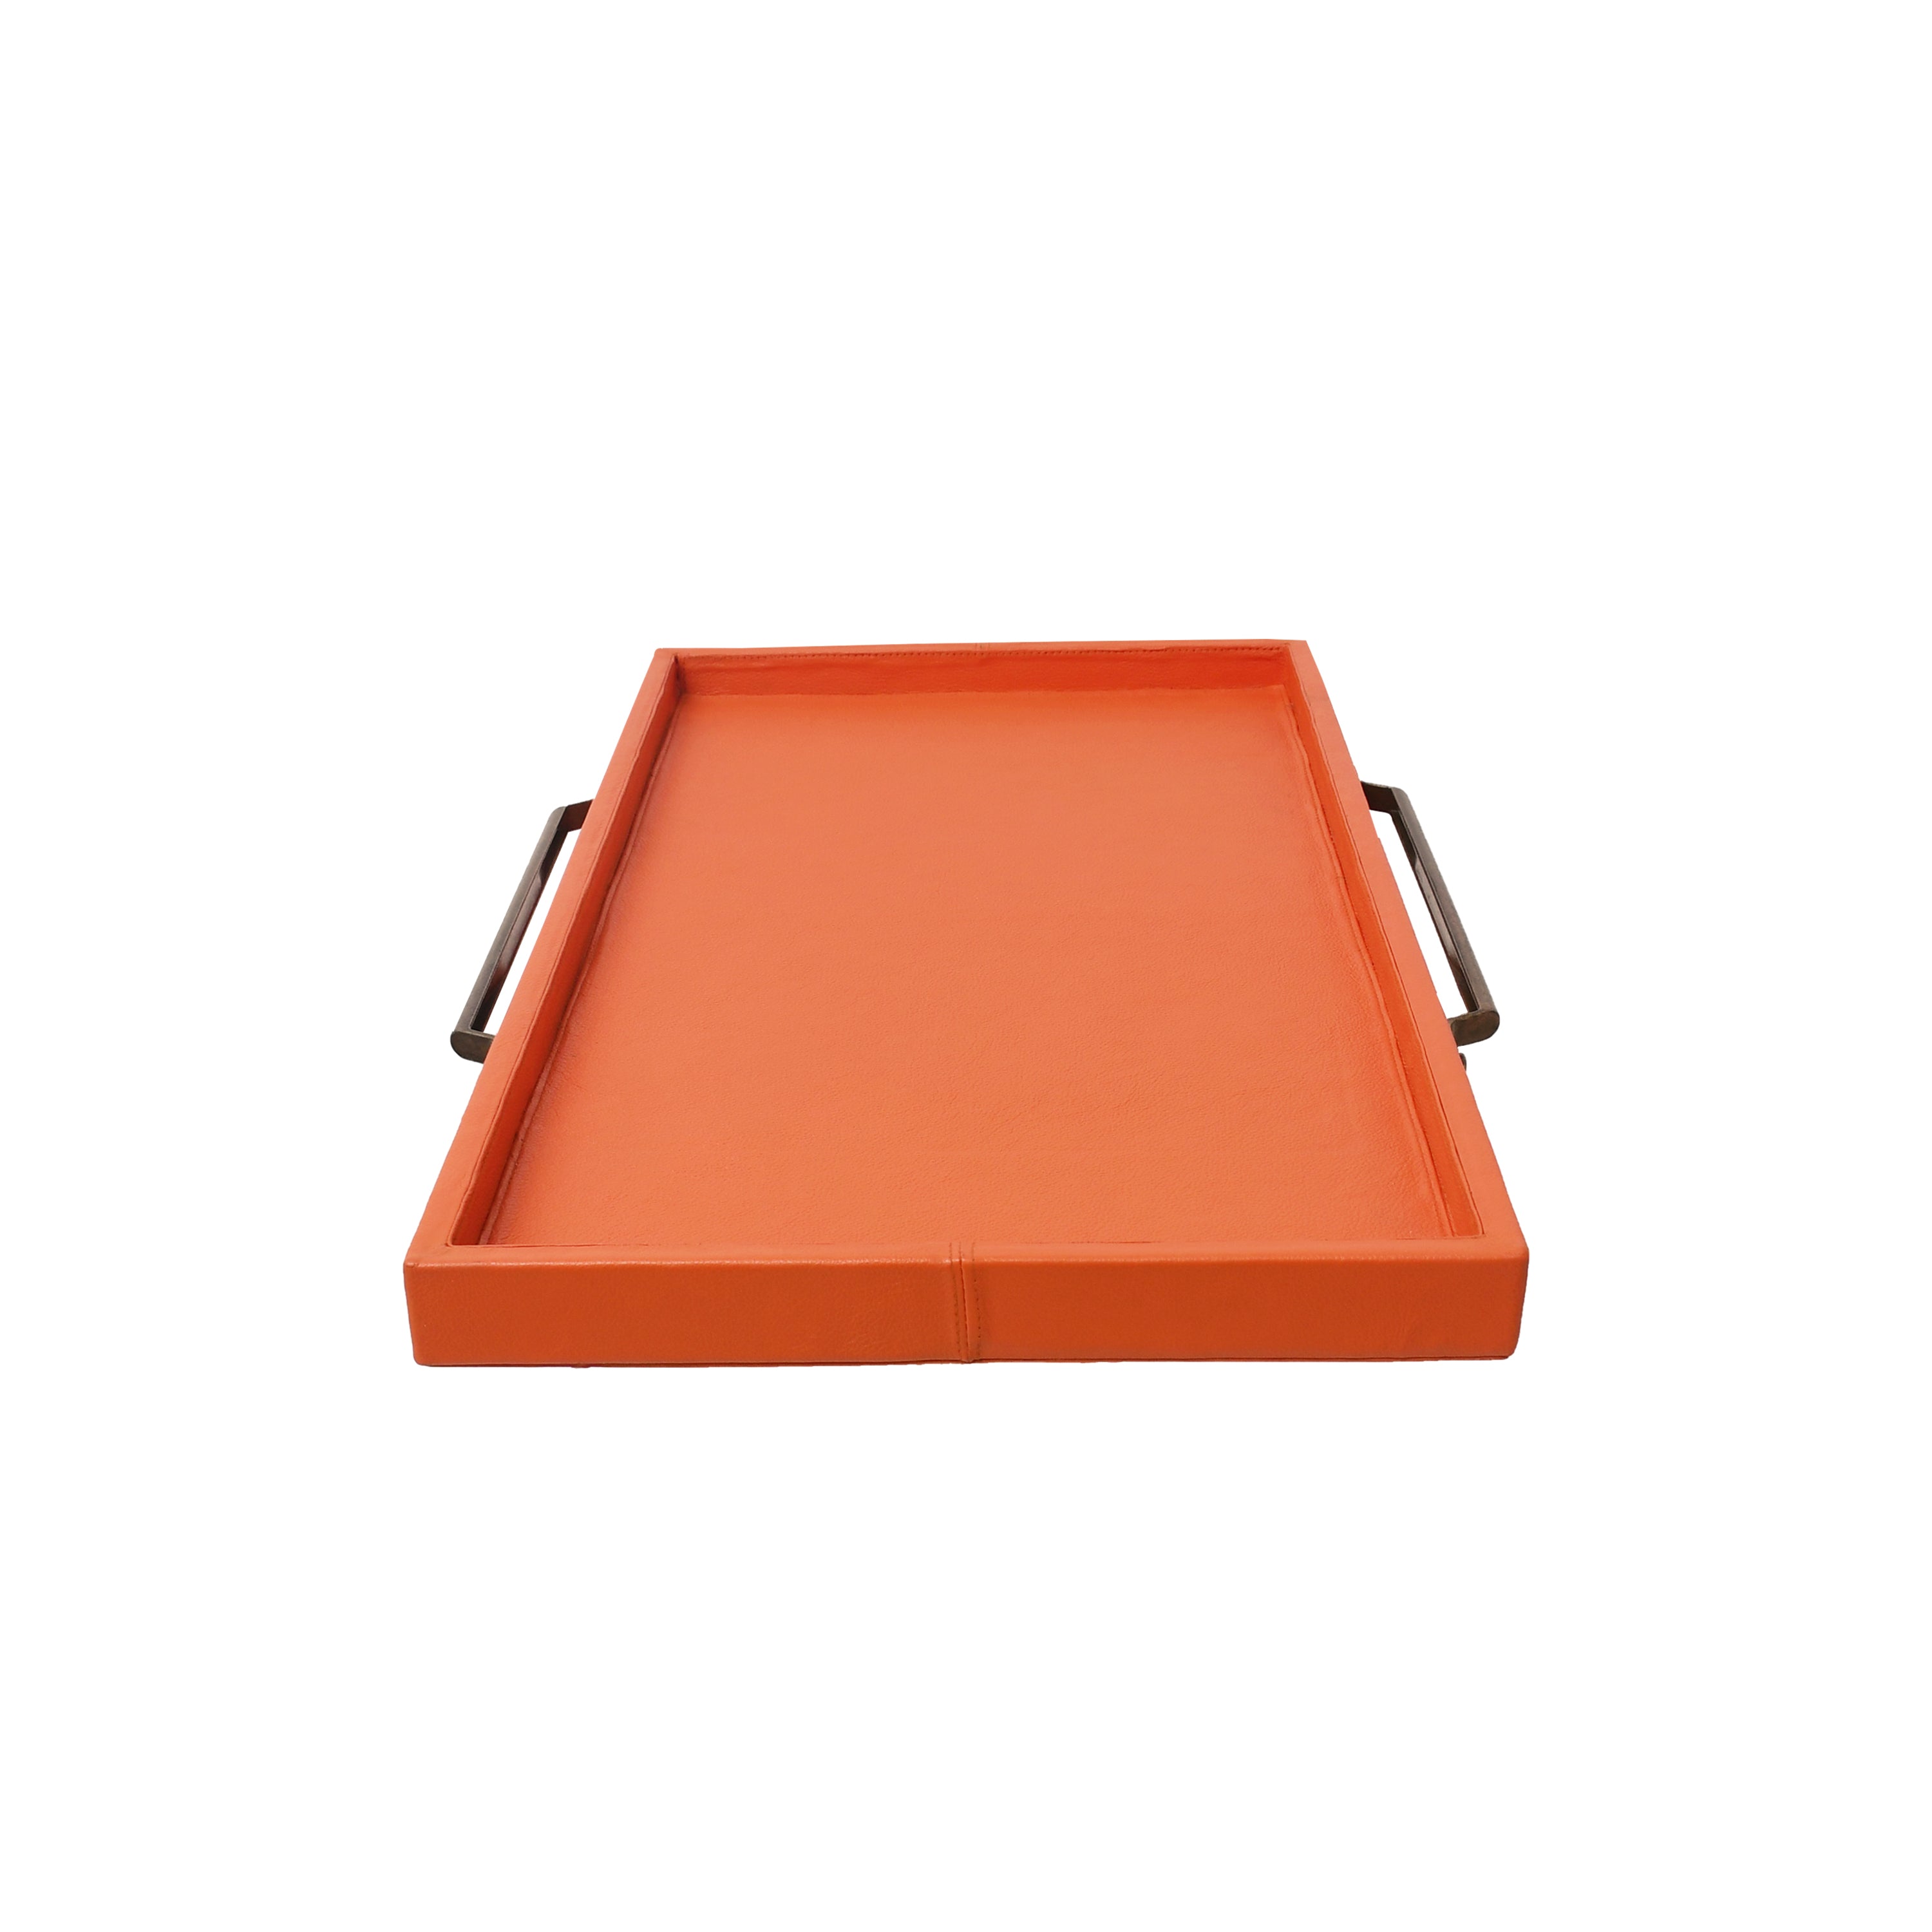 Orange Leather Wrapped Tray Side